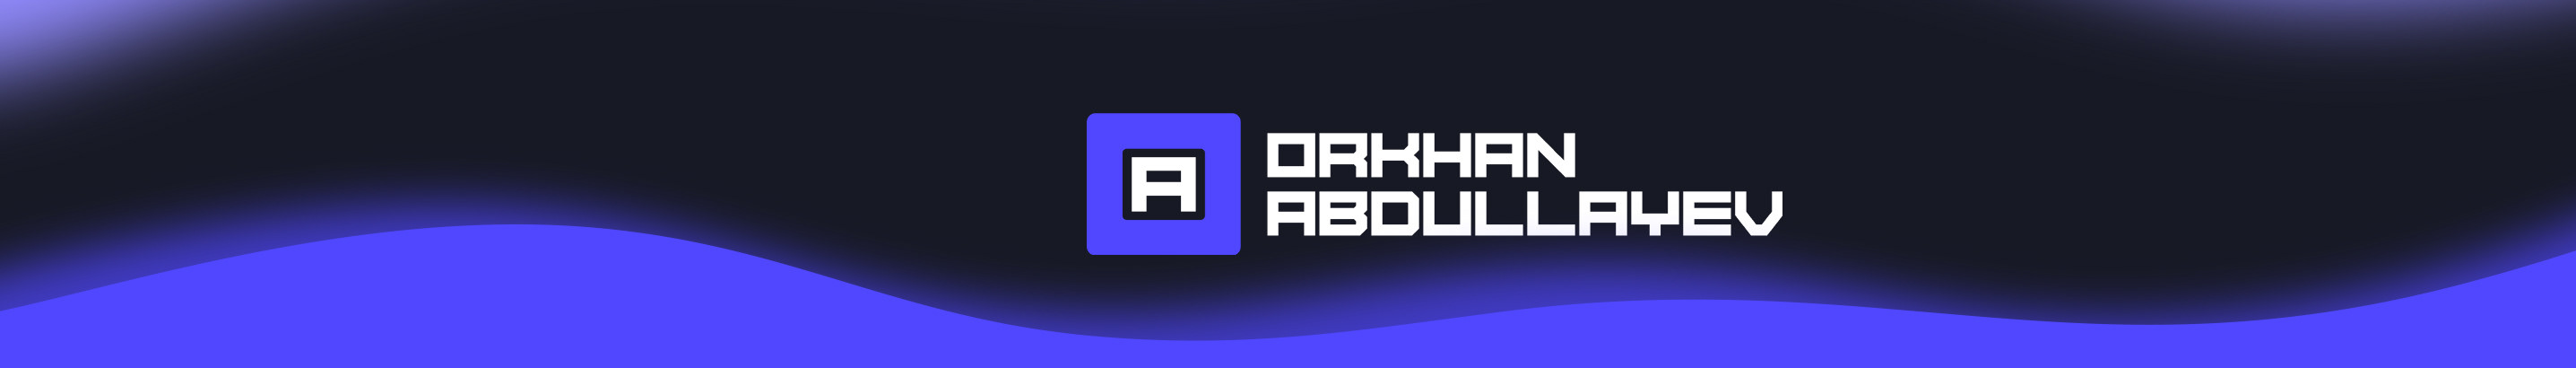 Orxan Abdullayev's profile banner